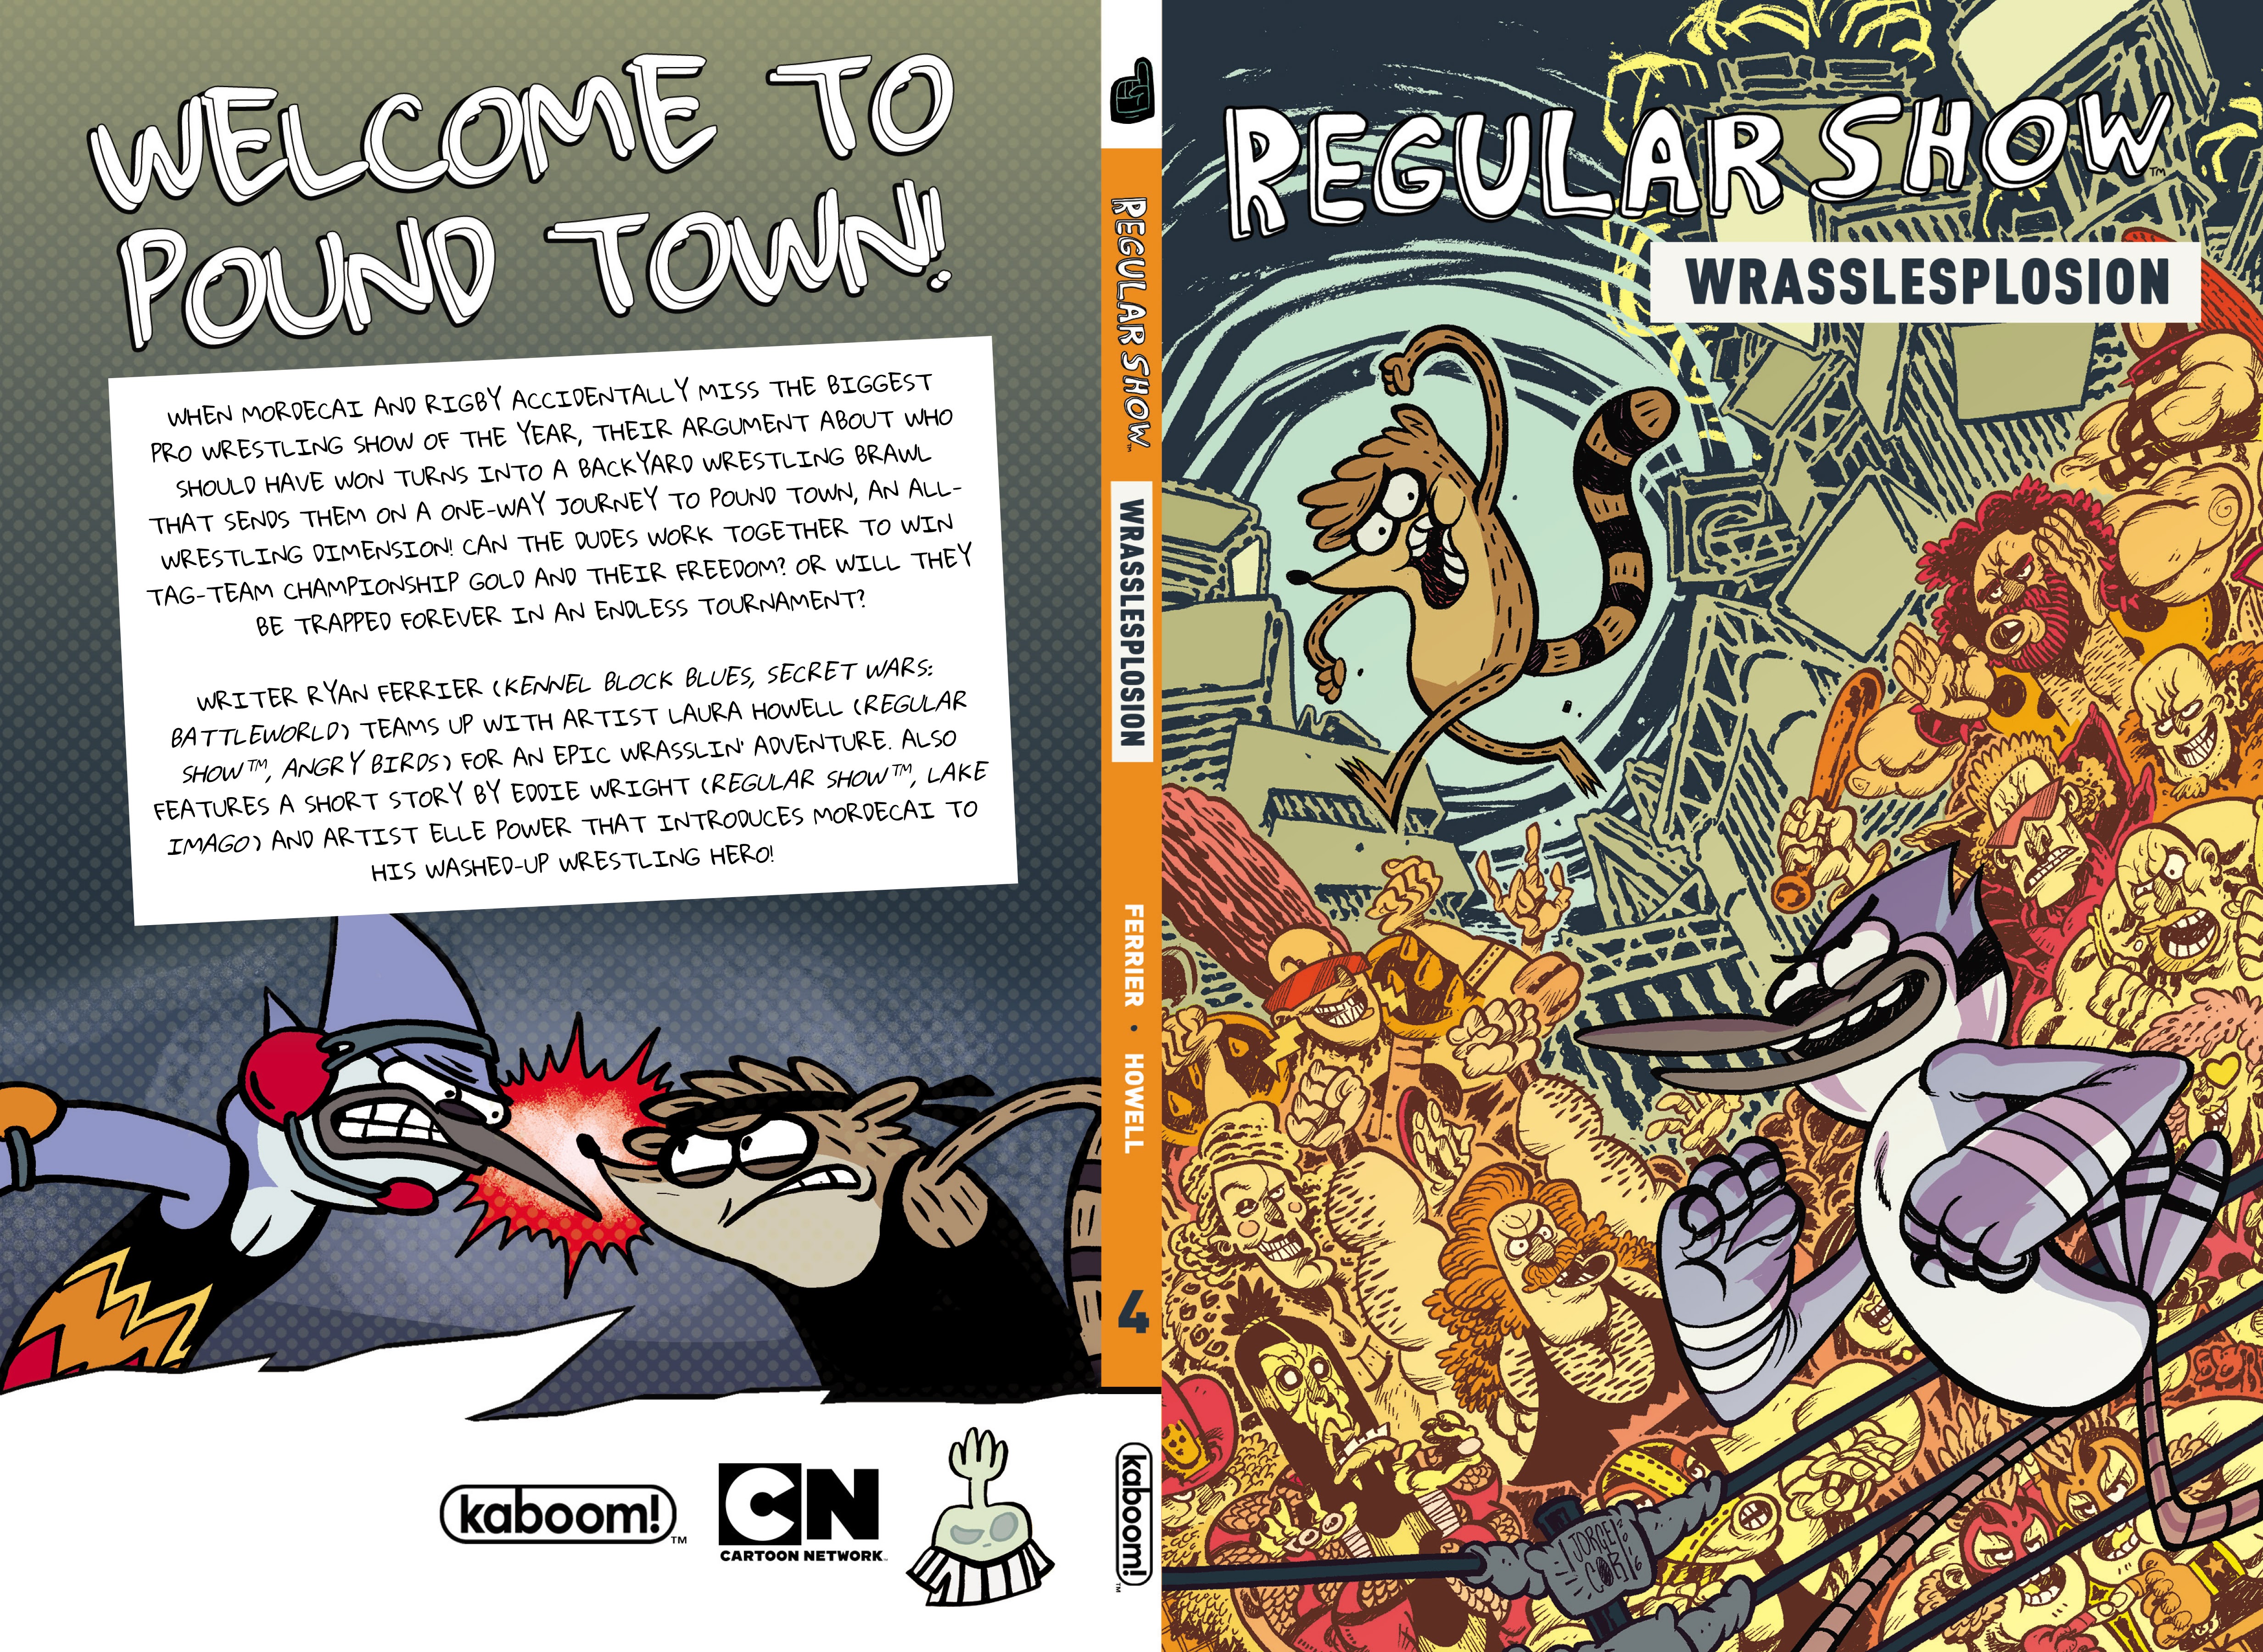 Read online Regular Show: Wrasslesplosion comic -  Issue # TPB - 1